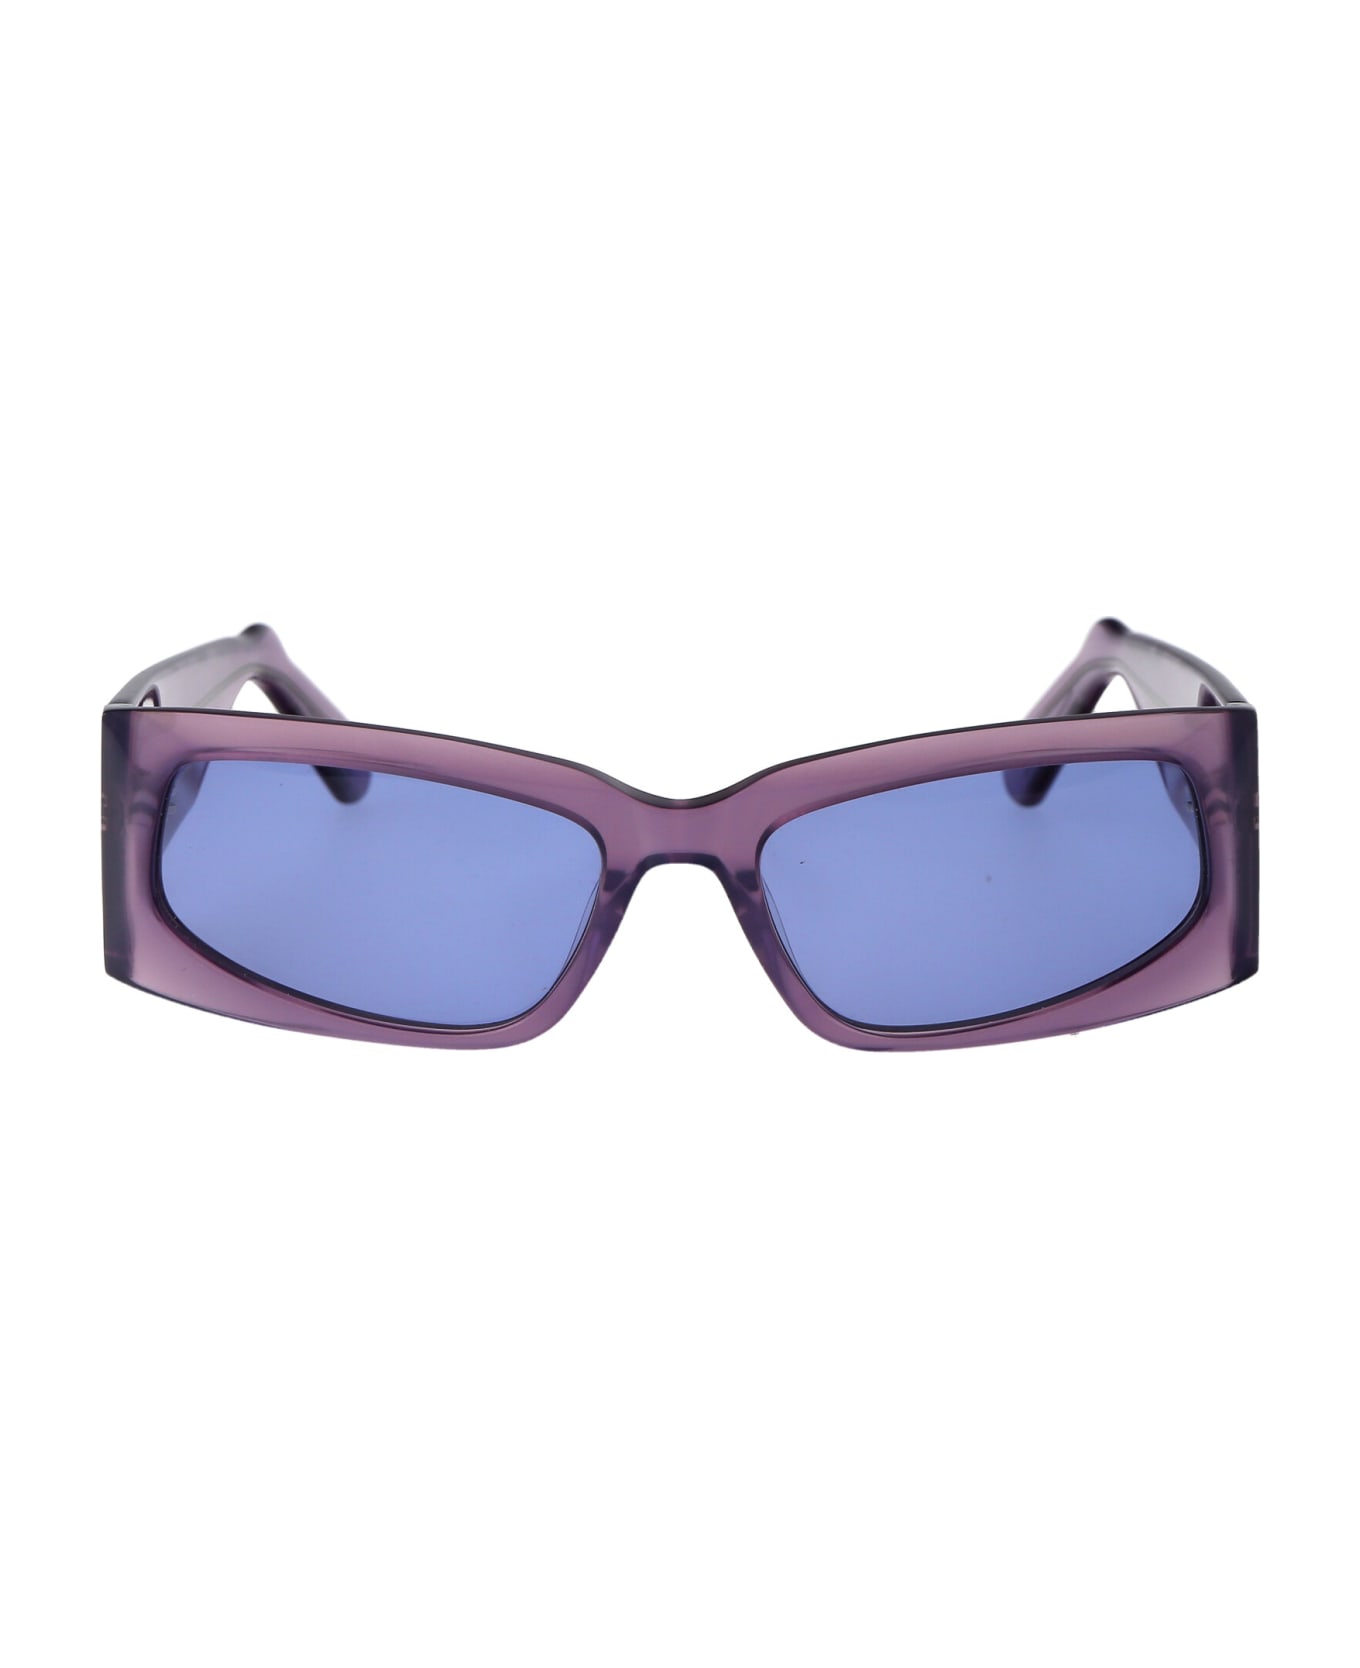 GCDS Gd0035 Sunglasses - 83V Viola/Altro/Blu サングラス